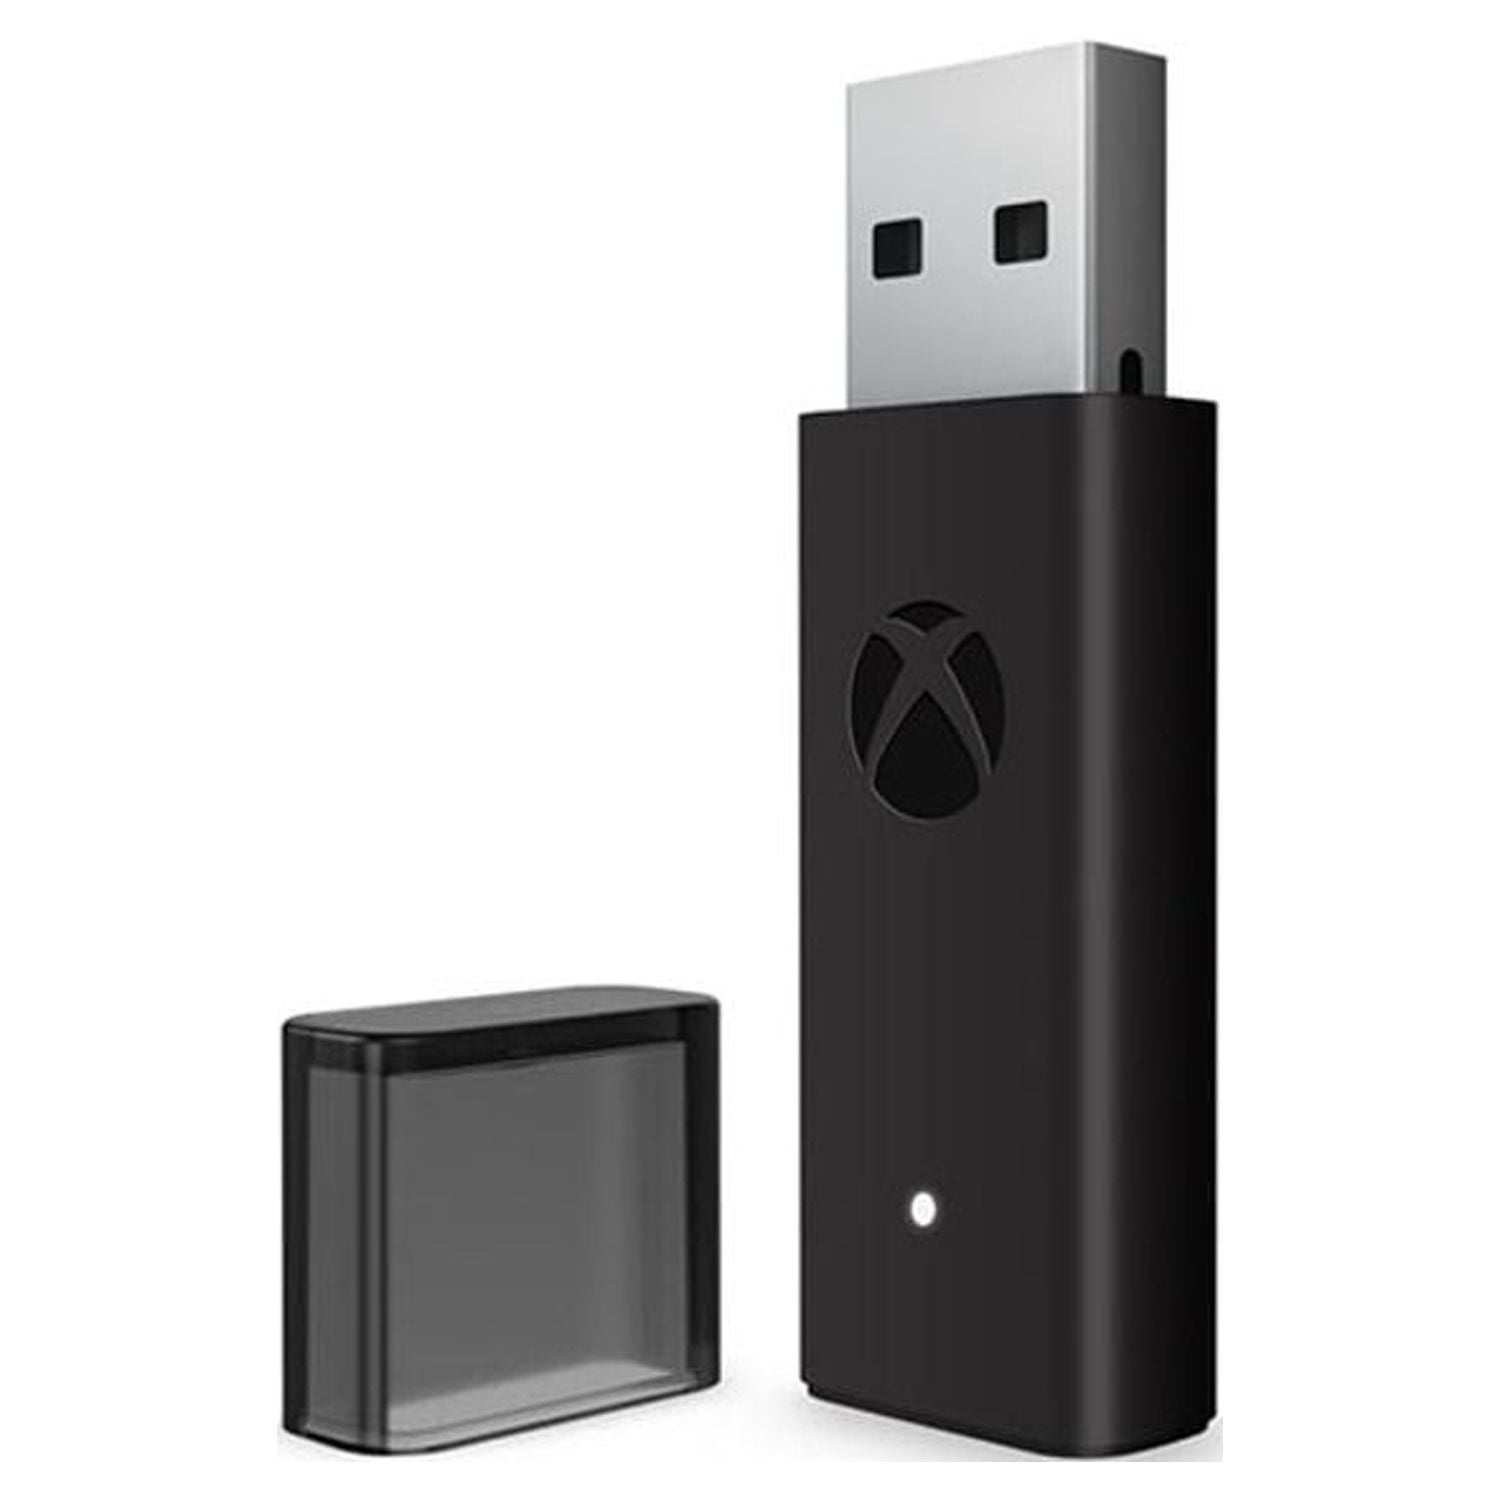 Xbox One Wireless Adapter for Windows 10